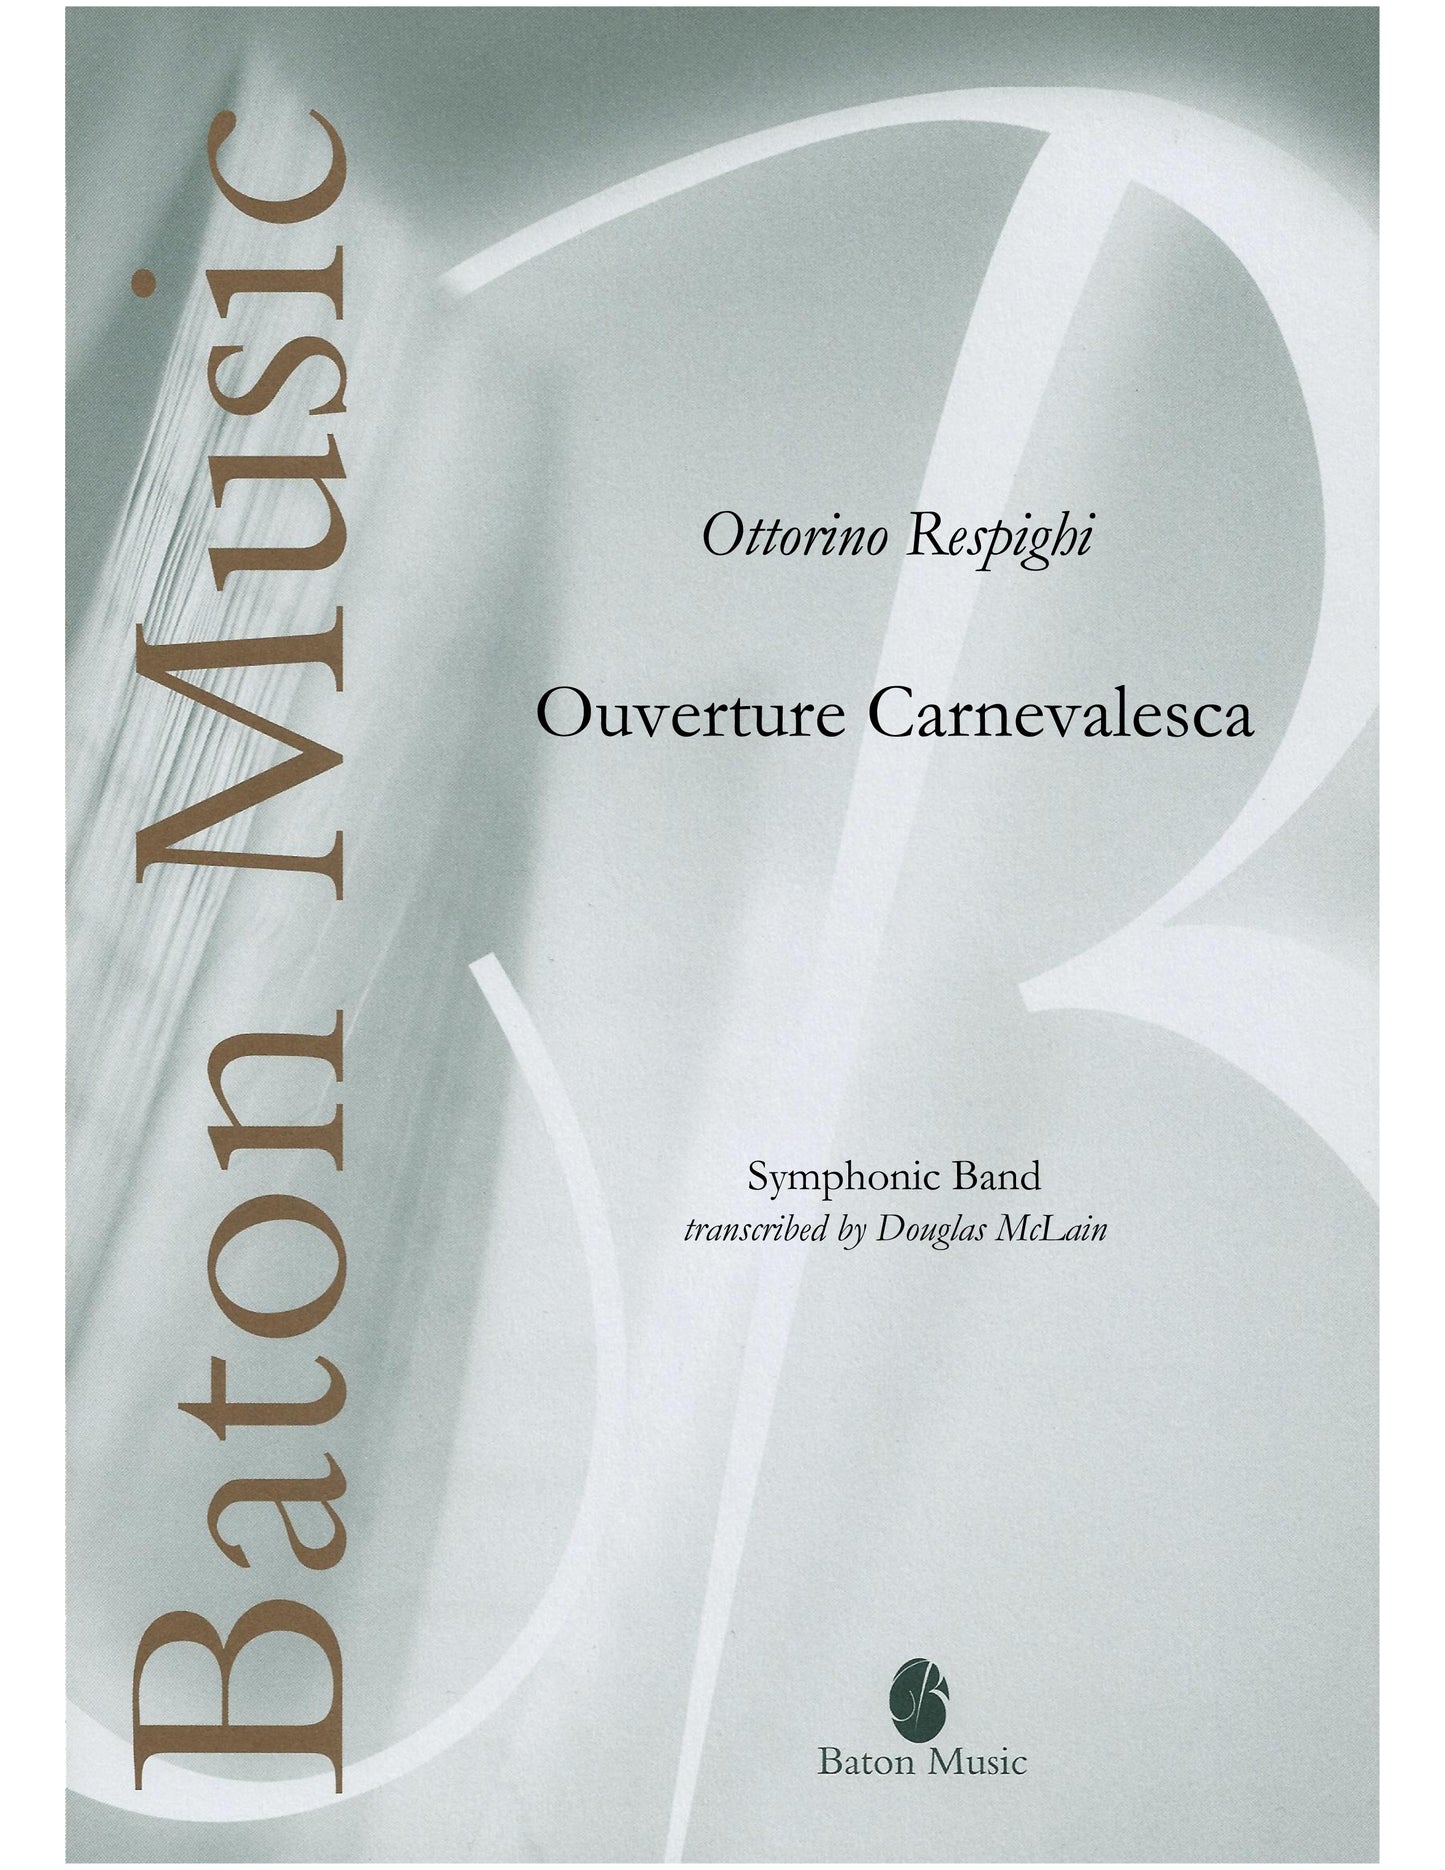 Ouverture Carnevalesca - Ottorino Respighi